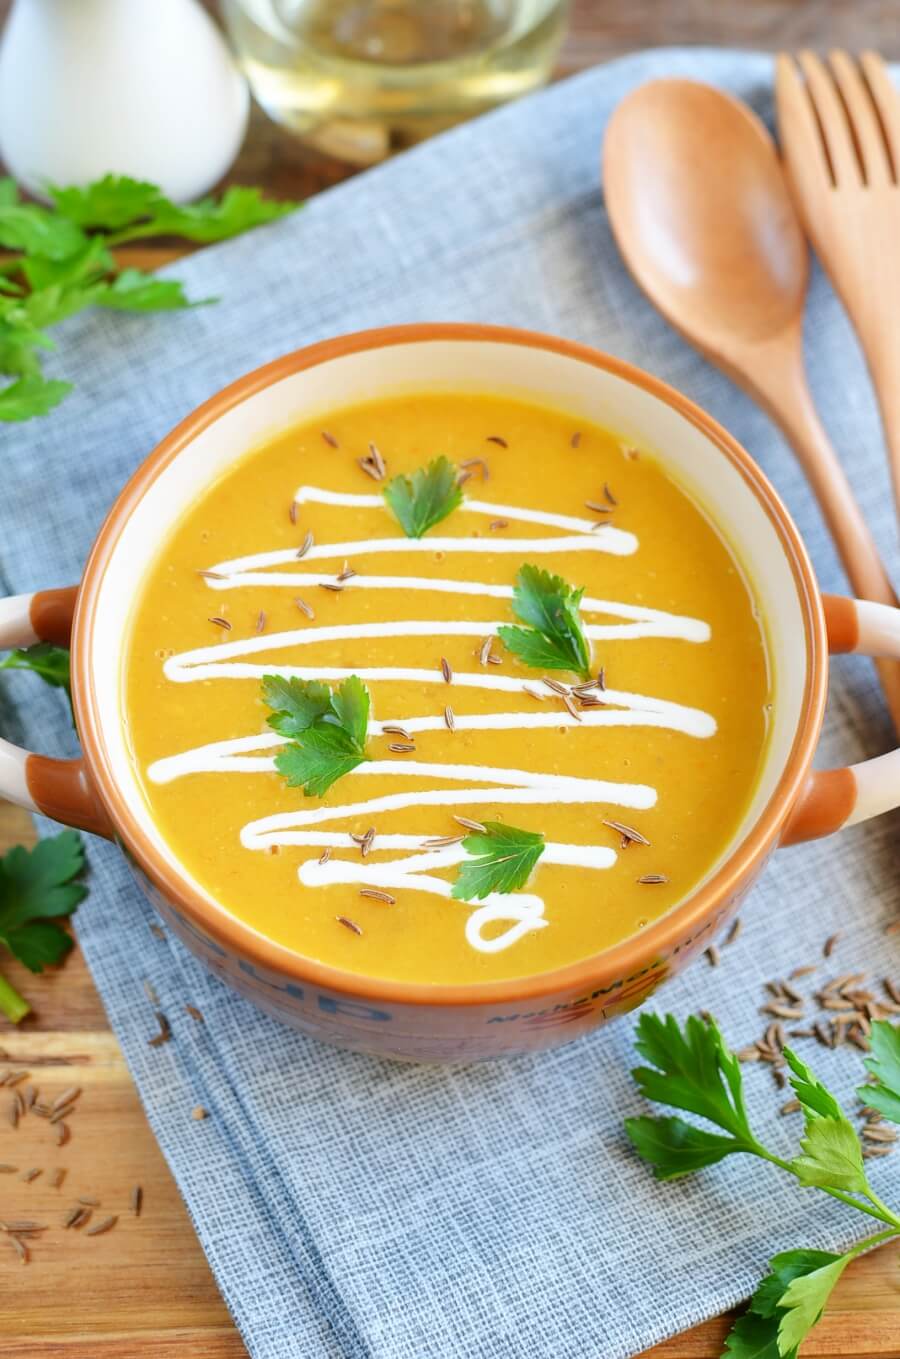 Spiced Carrot & Lentil Soup Recipe - Cook.me Recipes